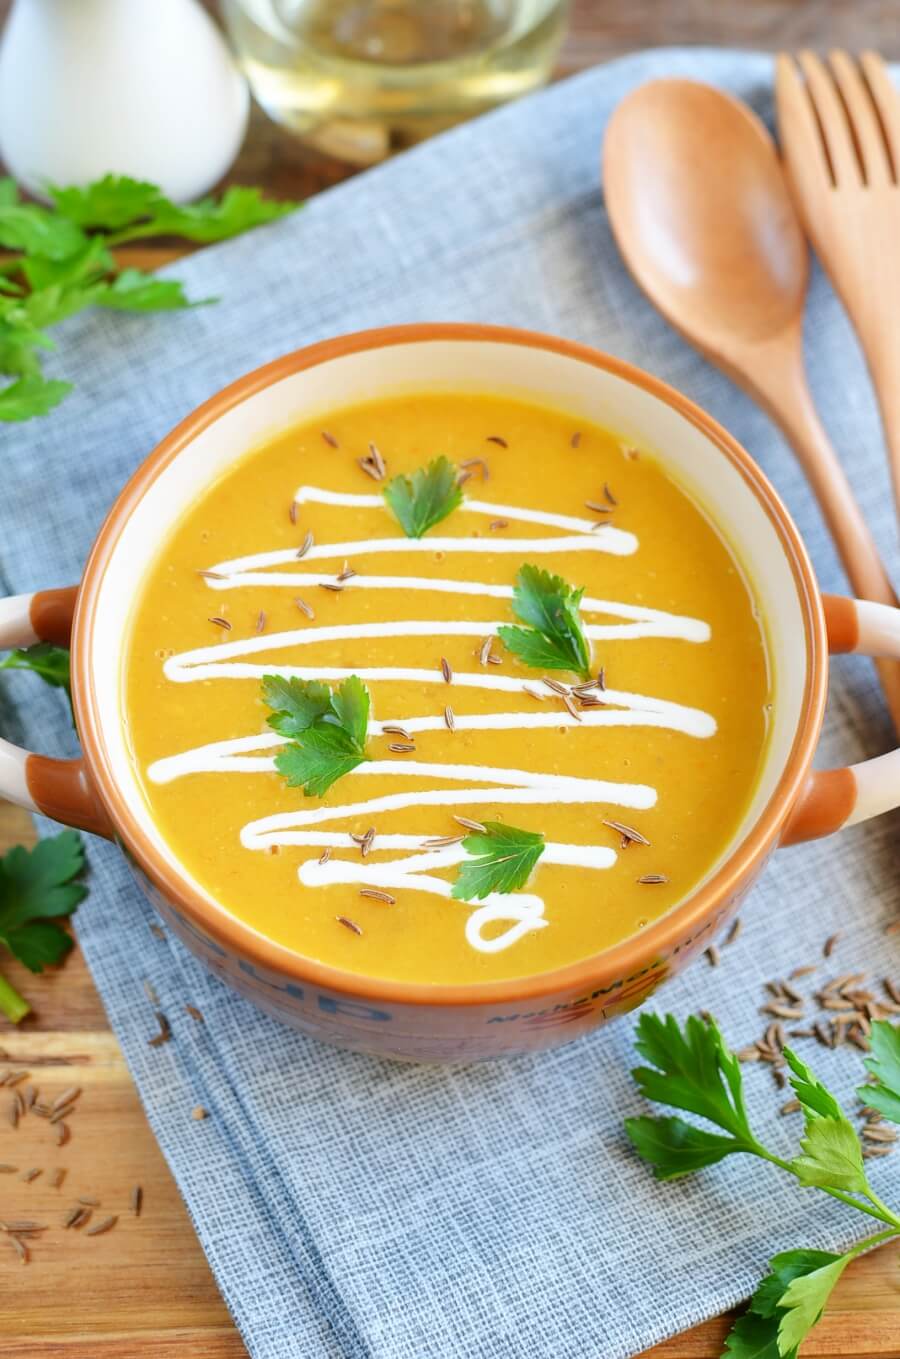 Spiced Carrot & Lentil Soup Recipe - Cook.me Recipes